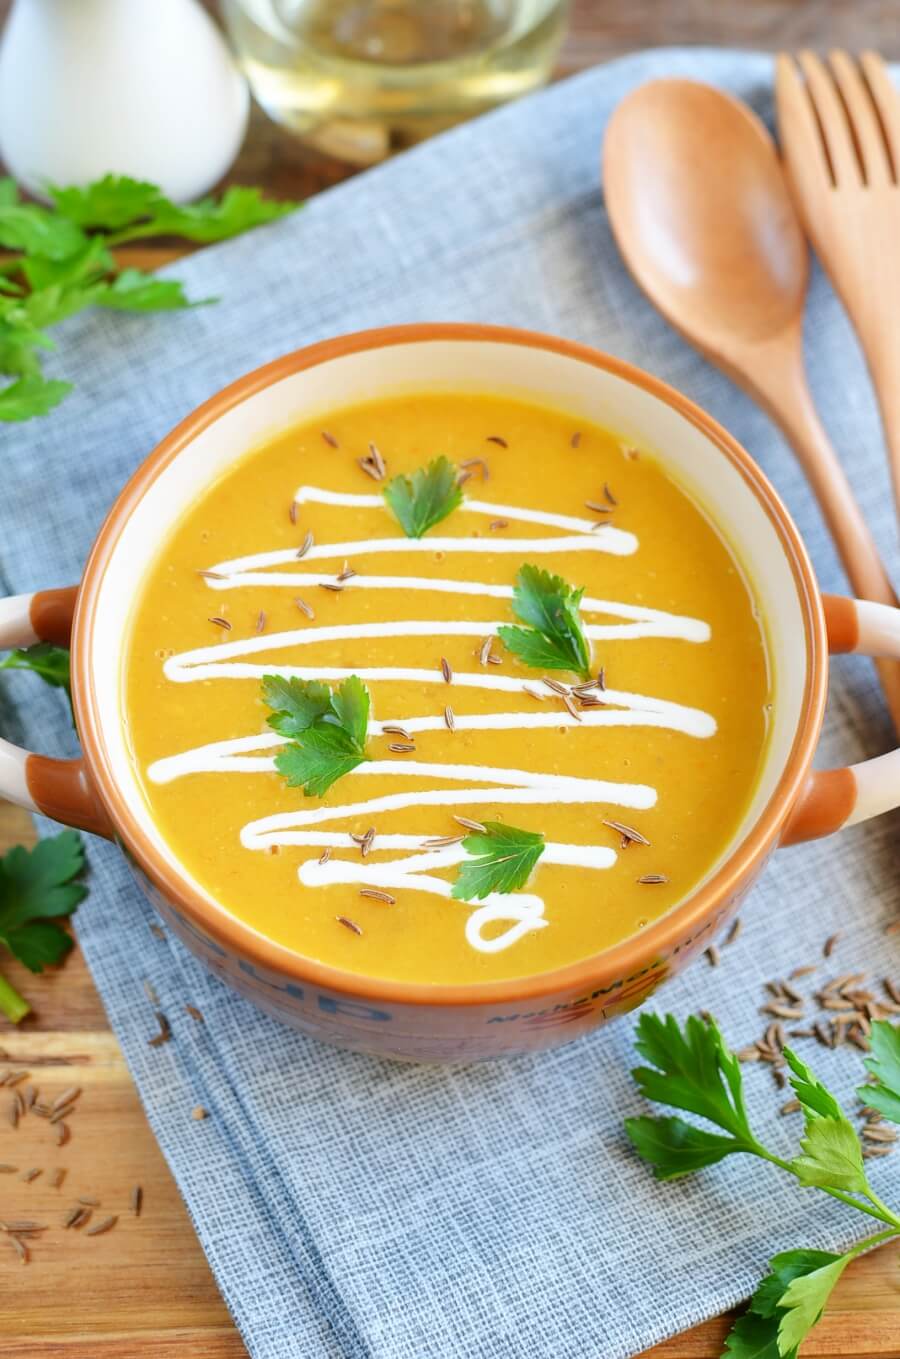 Spiced Carrot & Lentil Soup Recipe - Cook.me Recipes